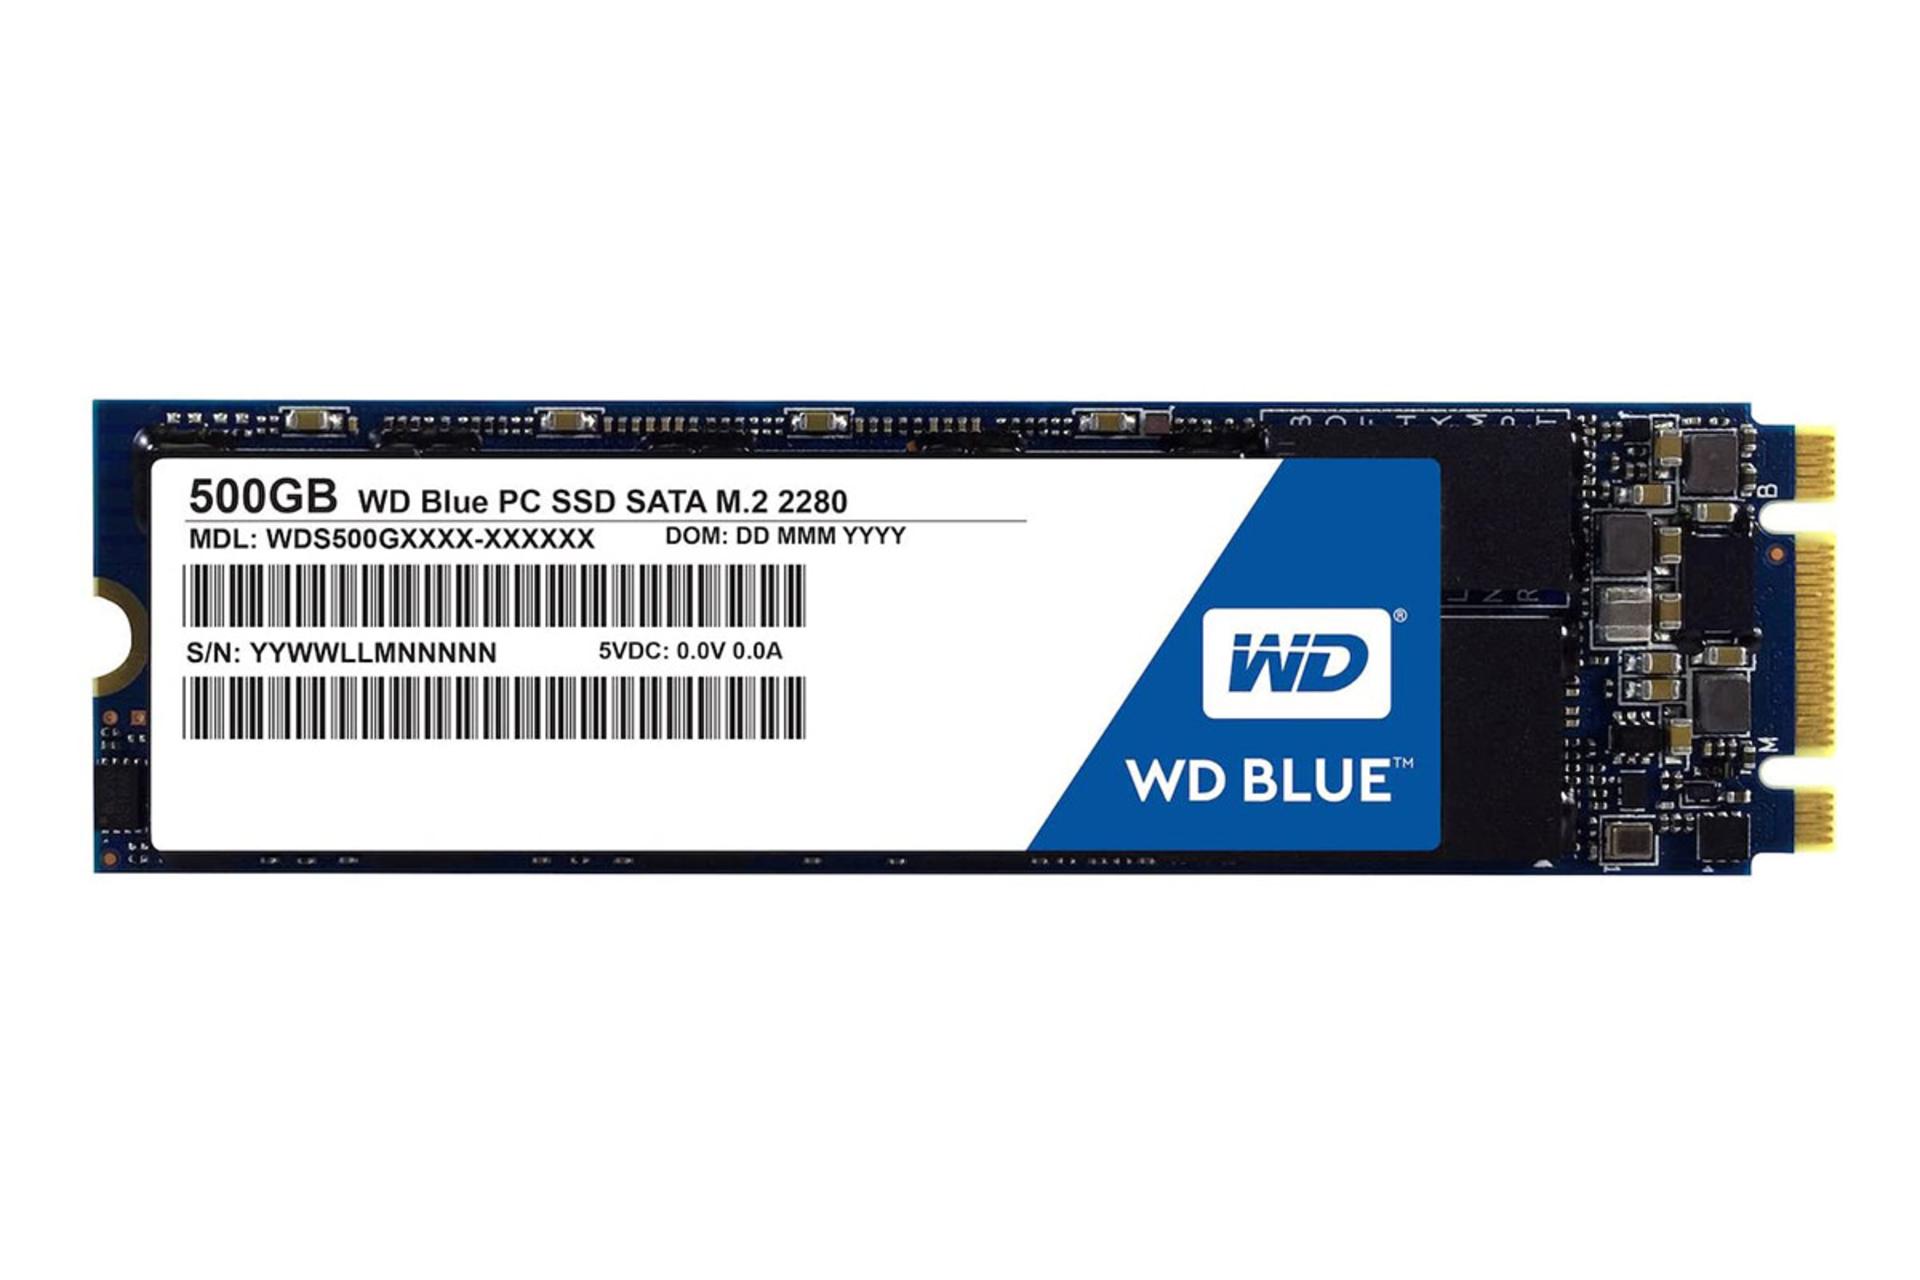 Western Digital BLUE WDS500G1B0B M.2 / وسترن دیجیتال BLUE WDS500G1B0B M.2